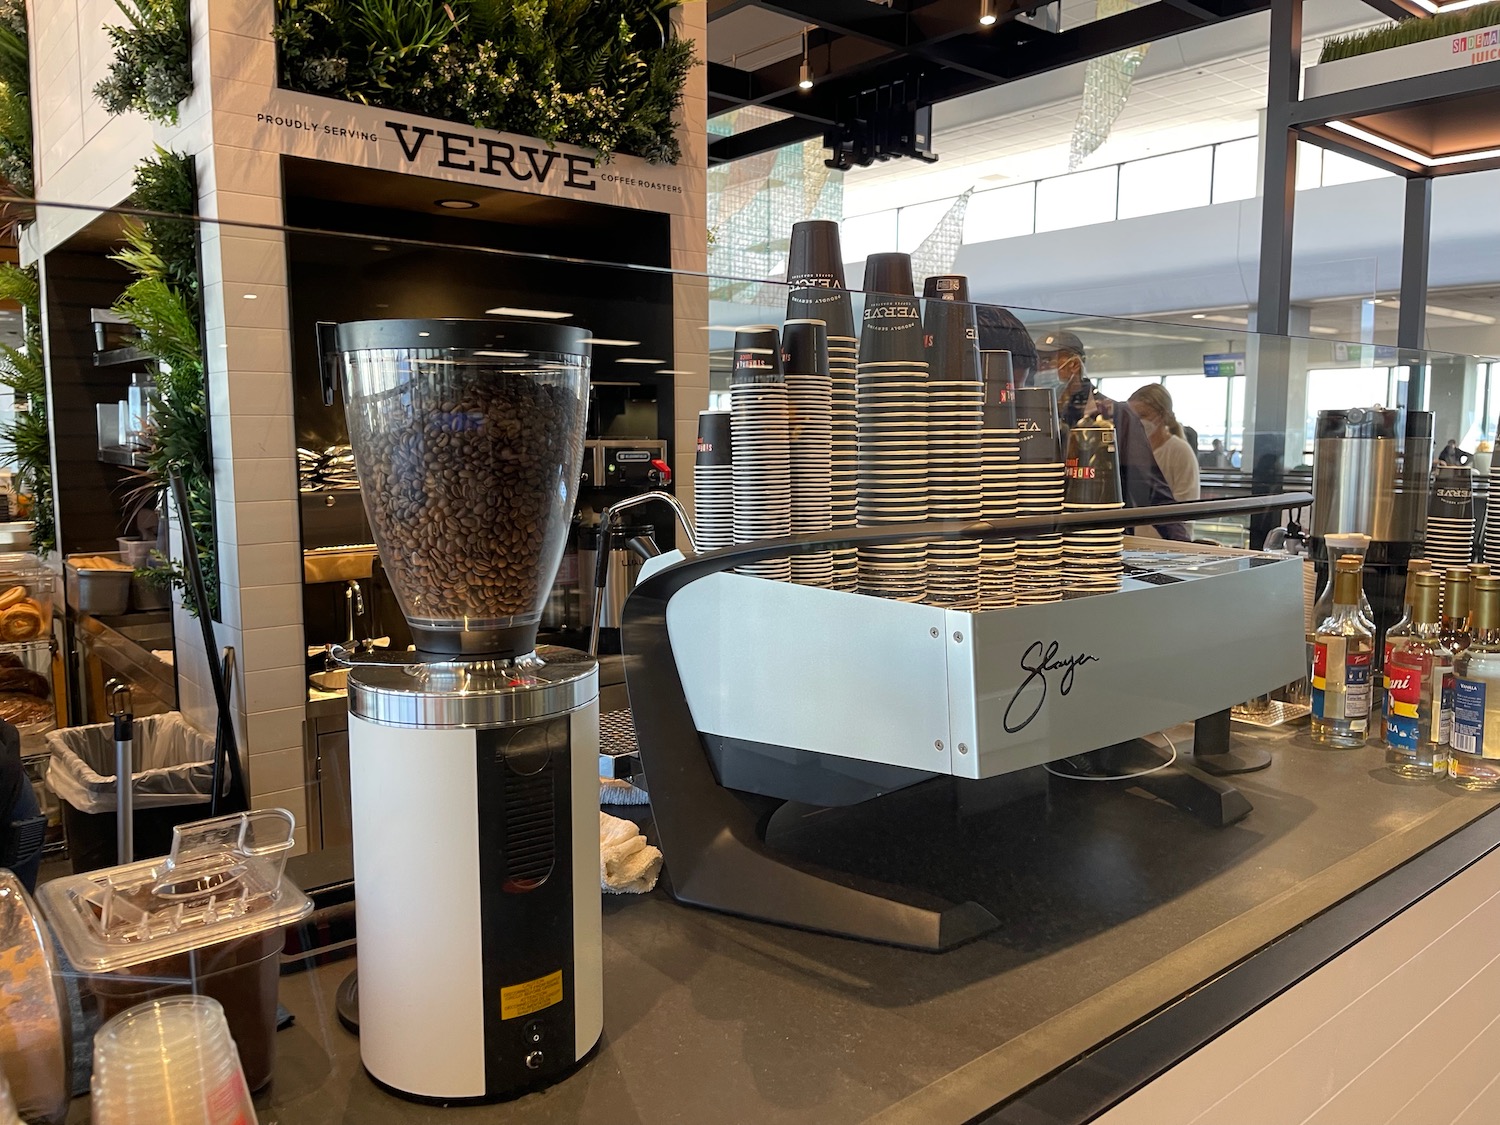 a coffee machine and coffee cups